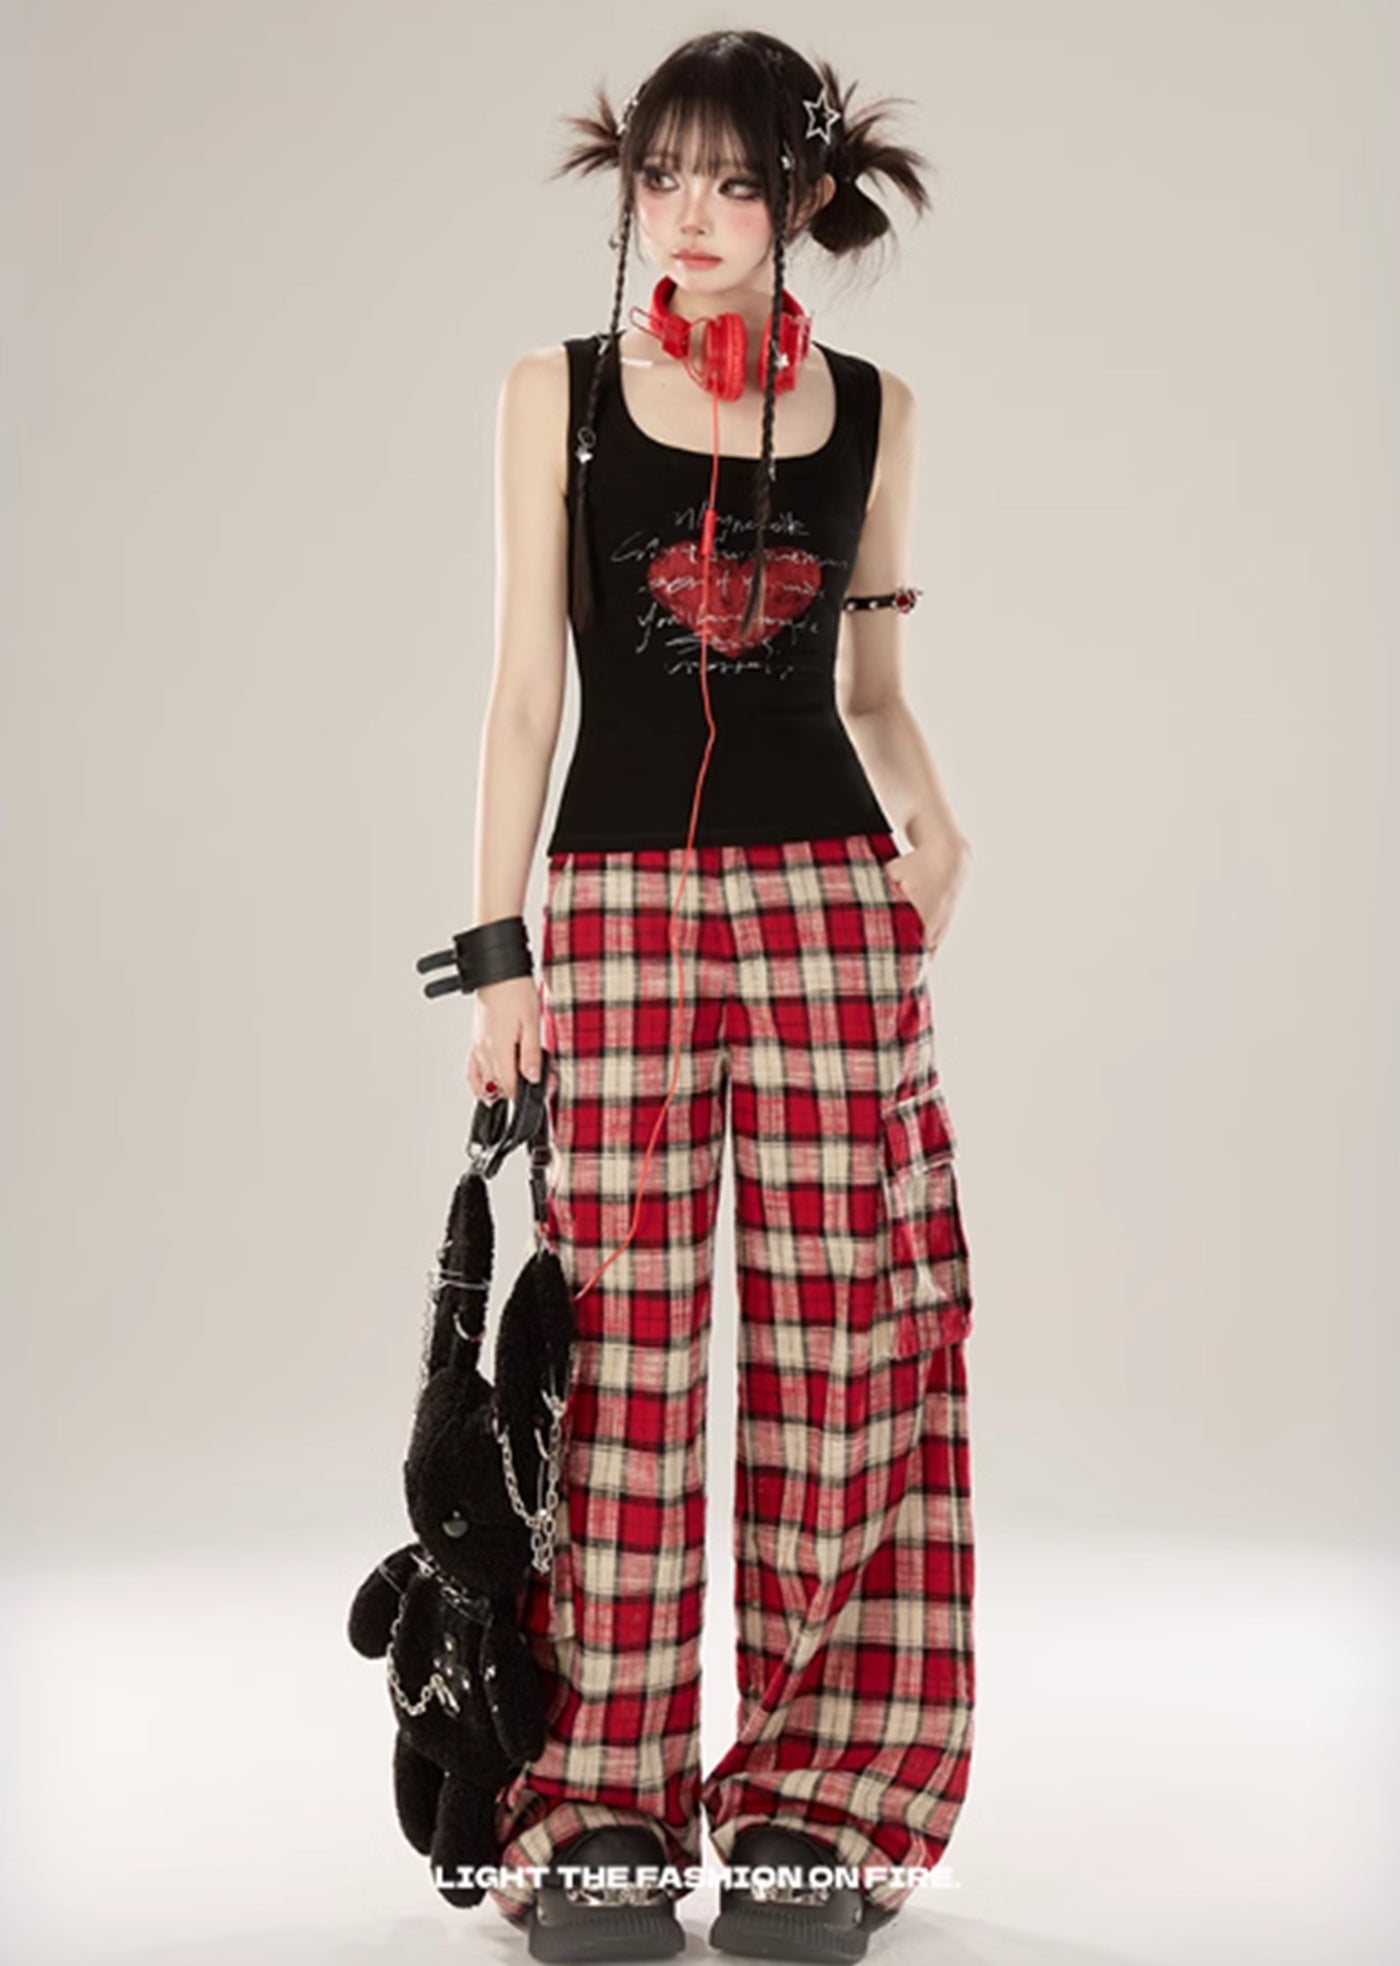 [Eleven shop97] Red check color wide silhouette subculture pants ES0018